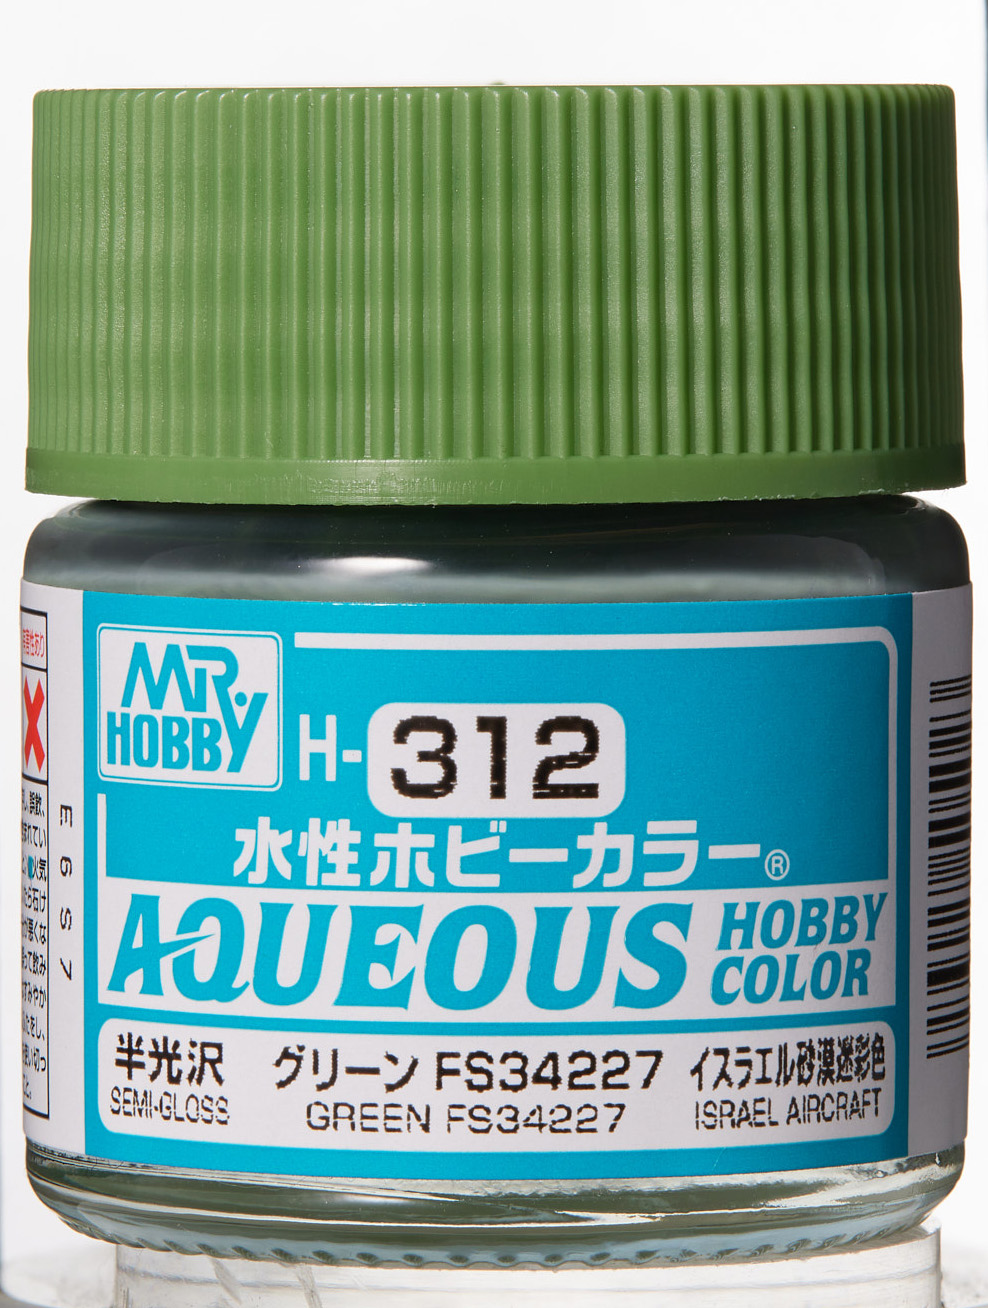 Mr. Aqueous Hobby Color - Green FS34227 - H312 - Grün FS34227